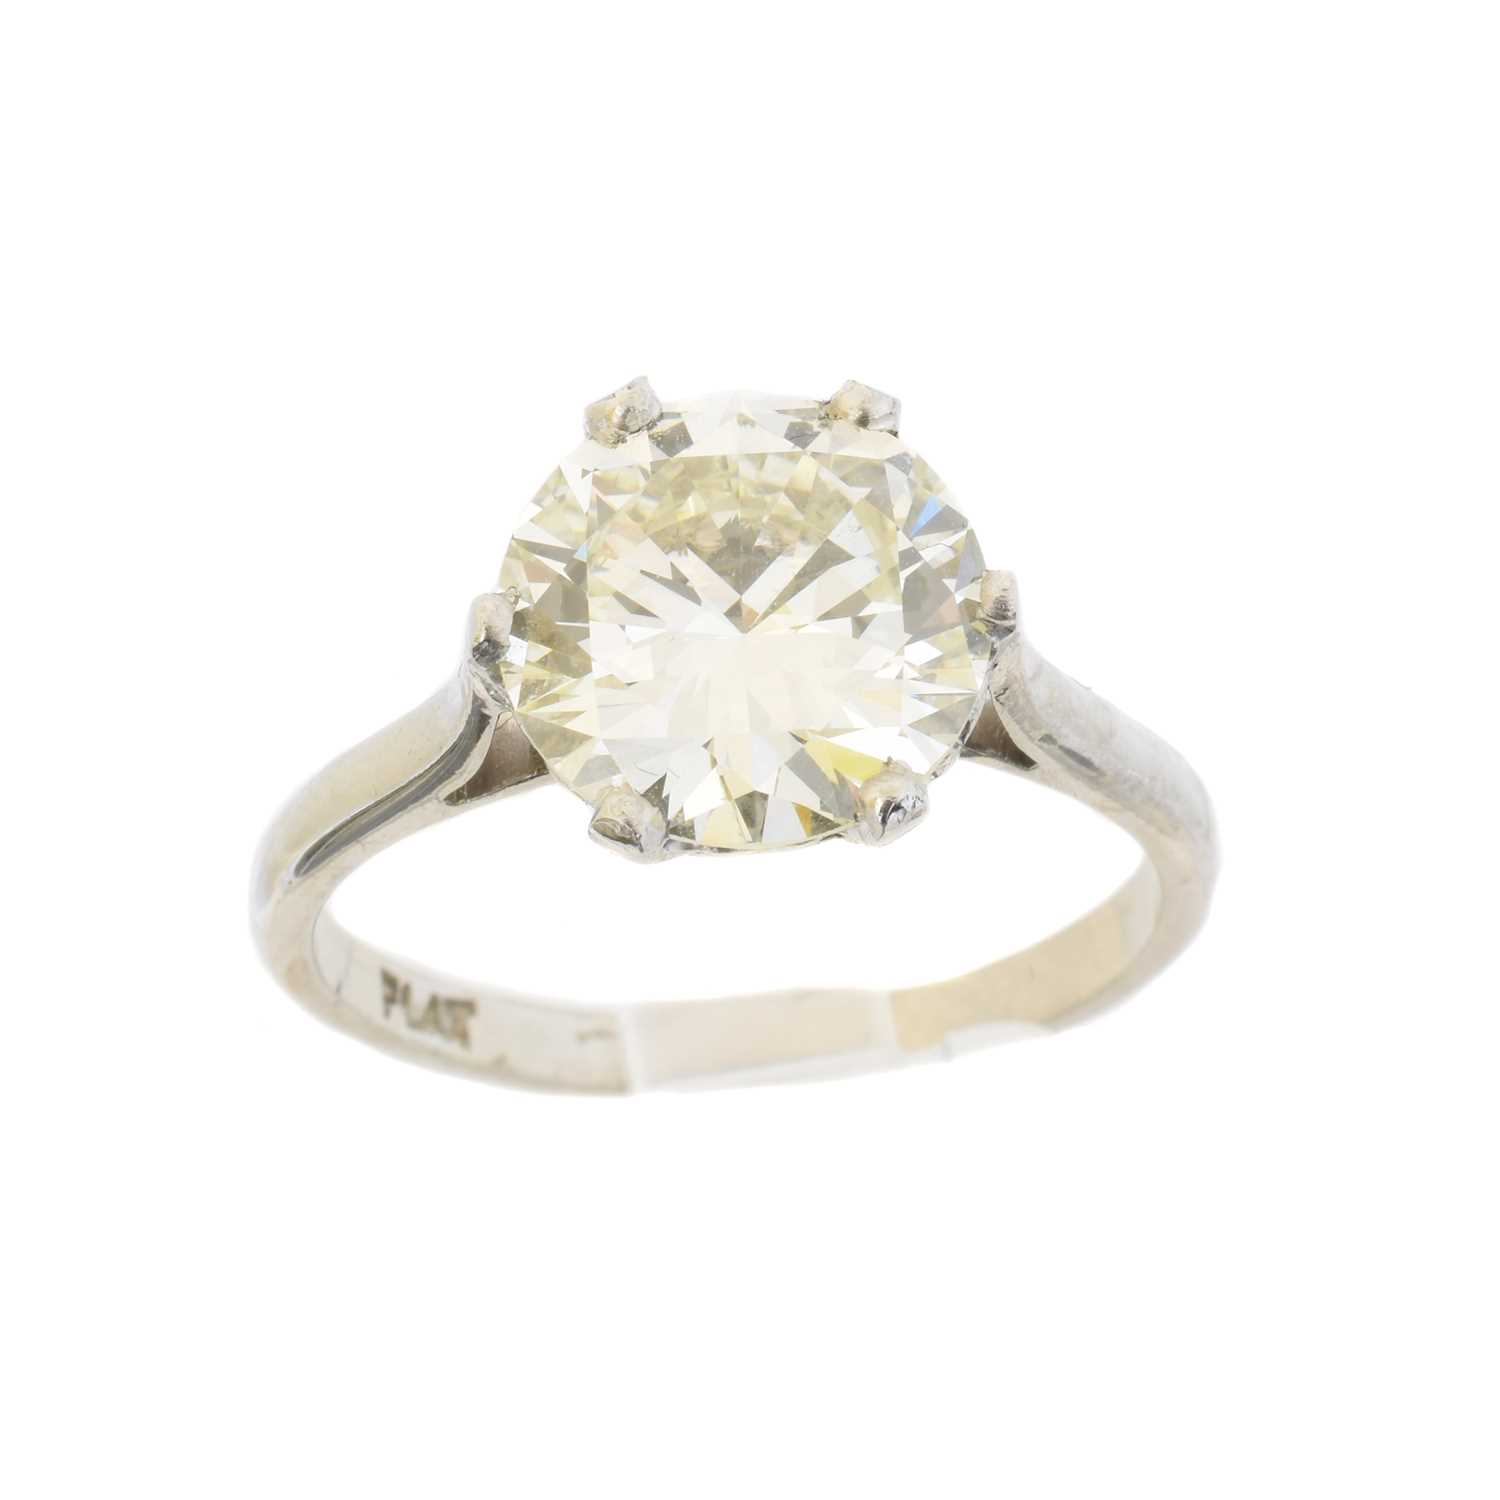 73 - A diamond single stone ring,